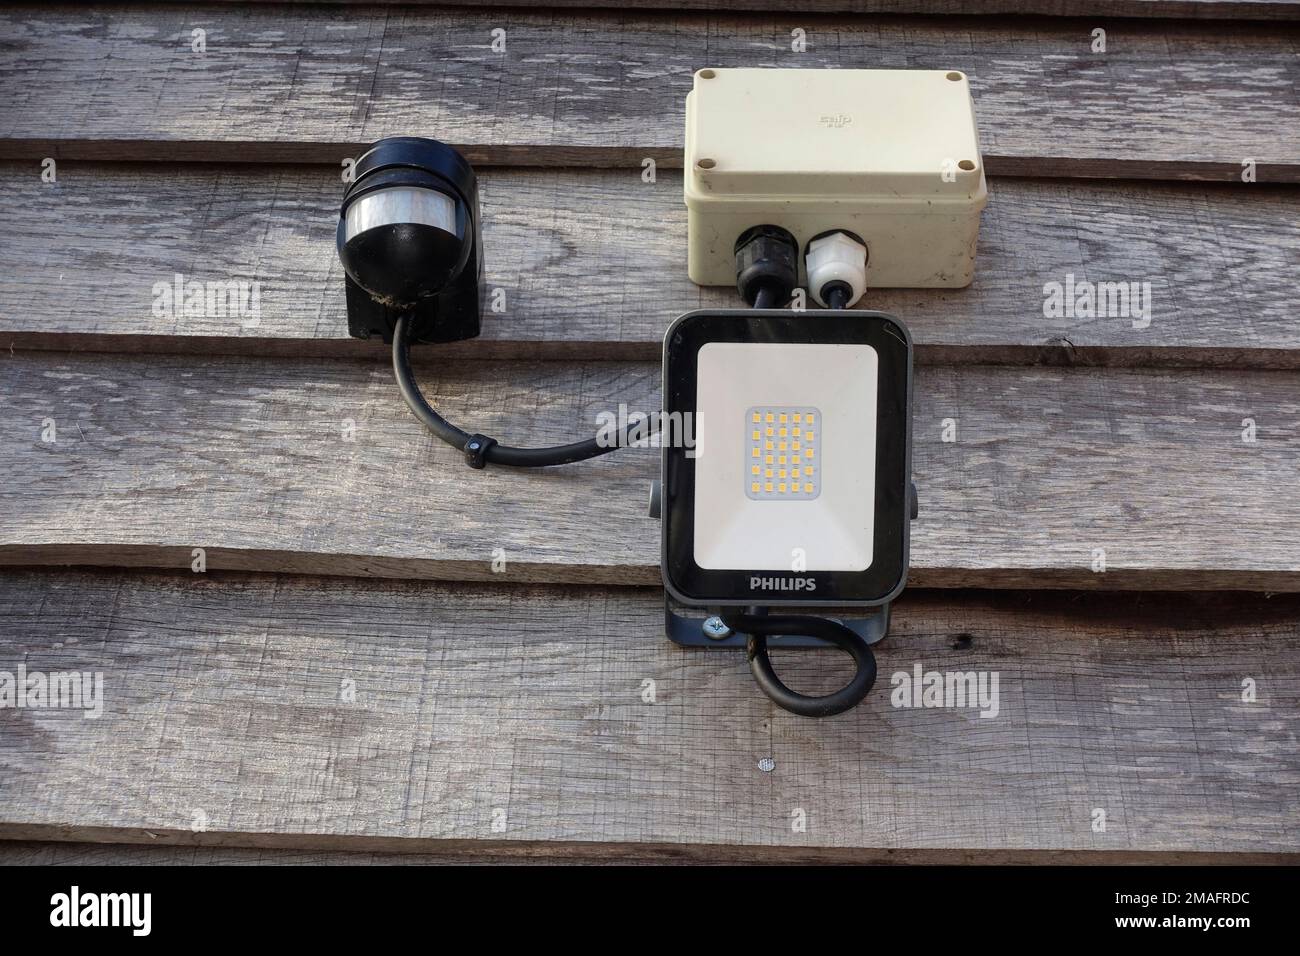 10W LED energy efficient outside automaticfloodlight controlled by adjacent sensor unit. Stock Photo